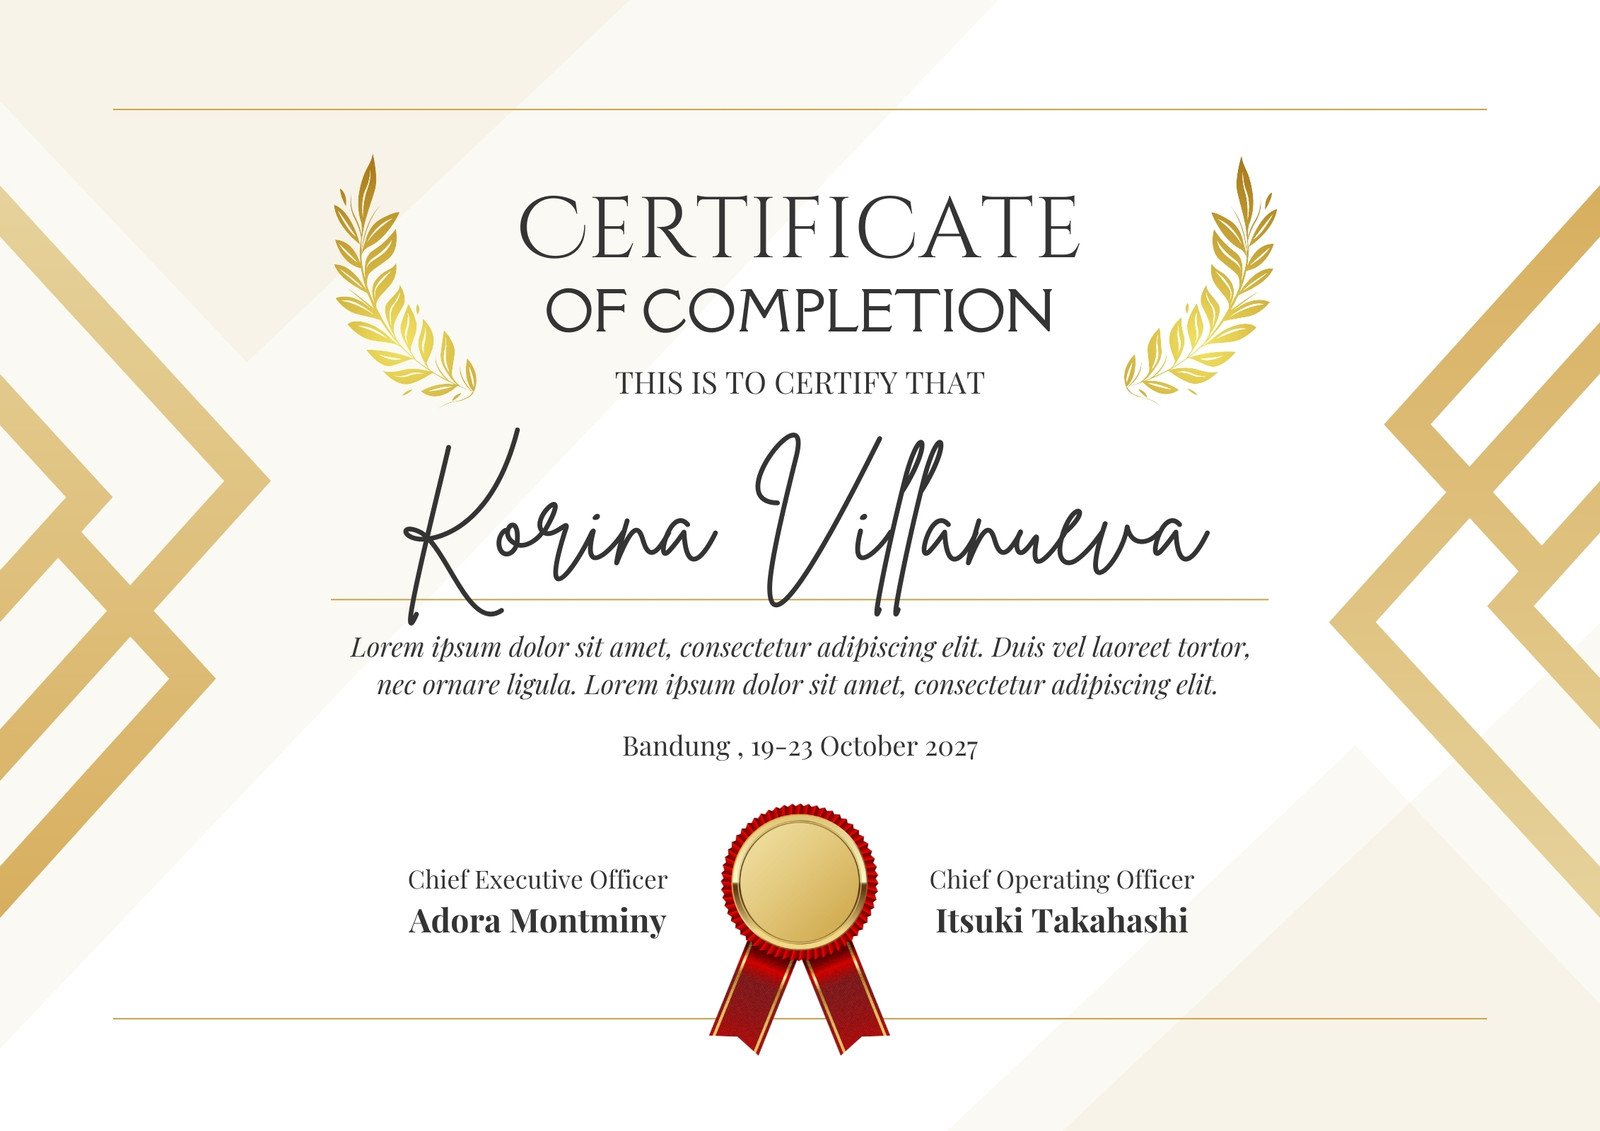 award certificate design inspiration